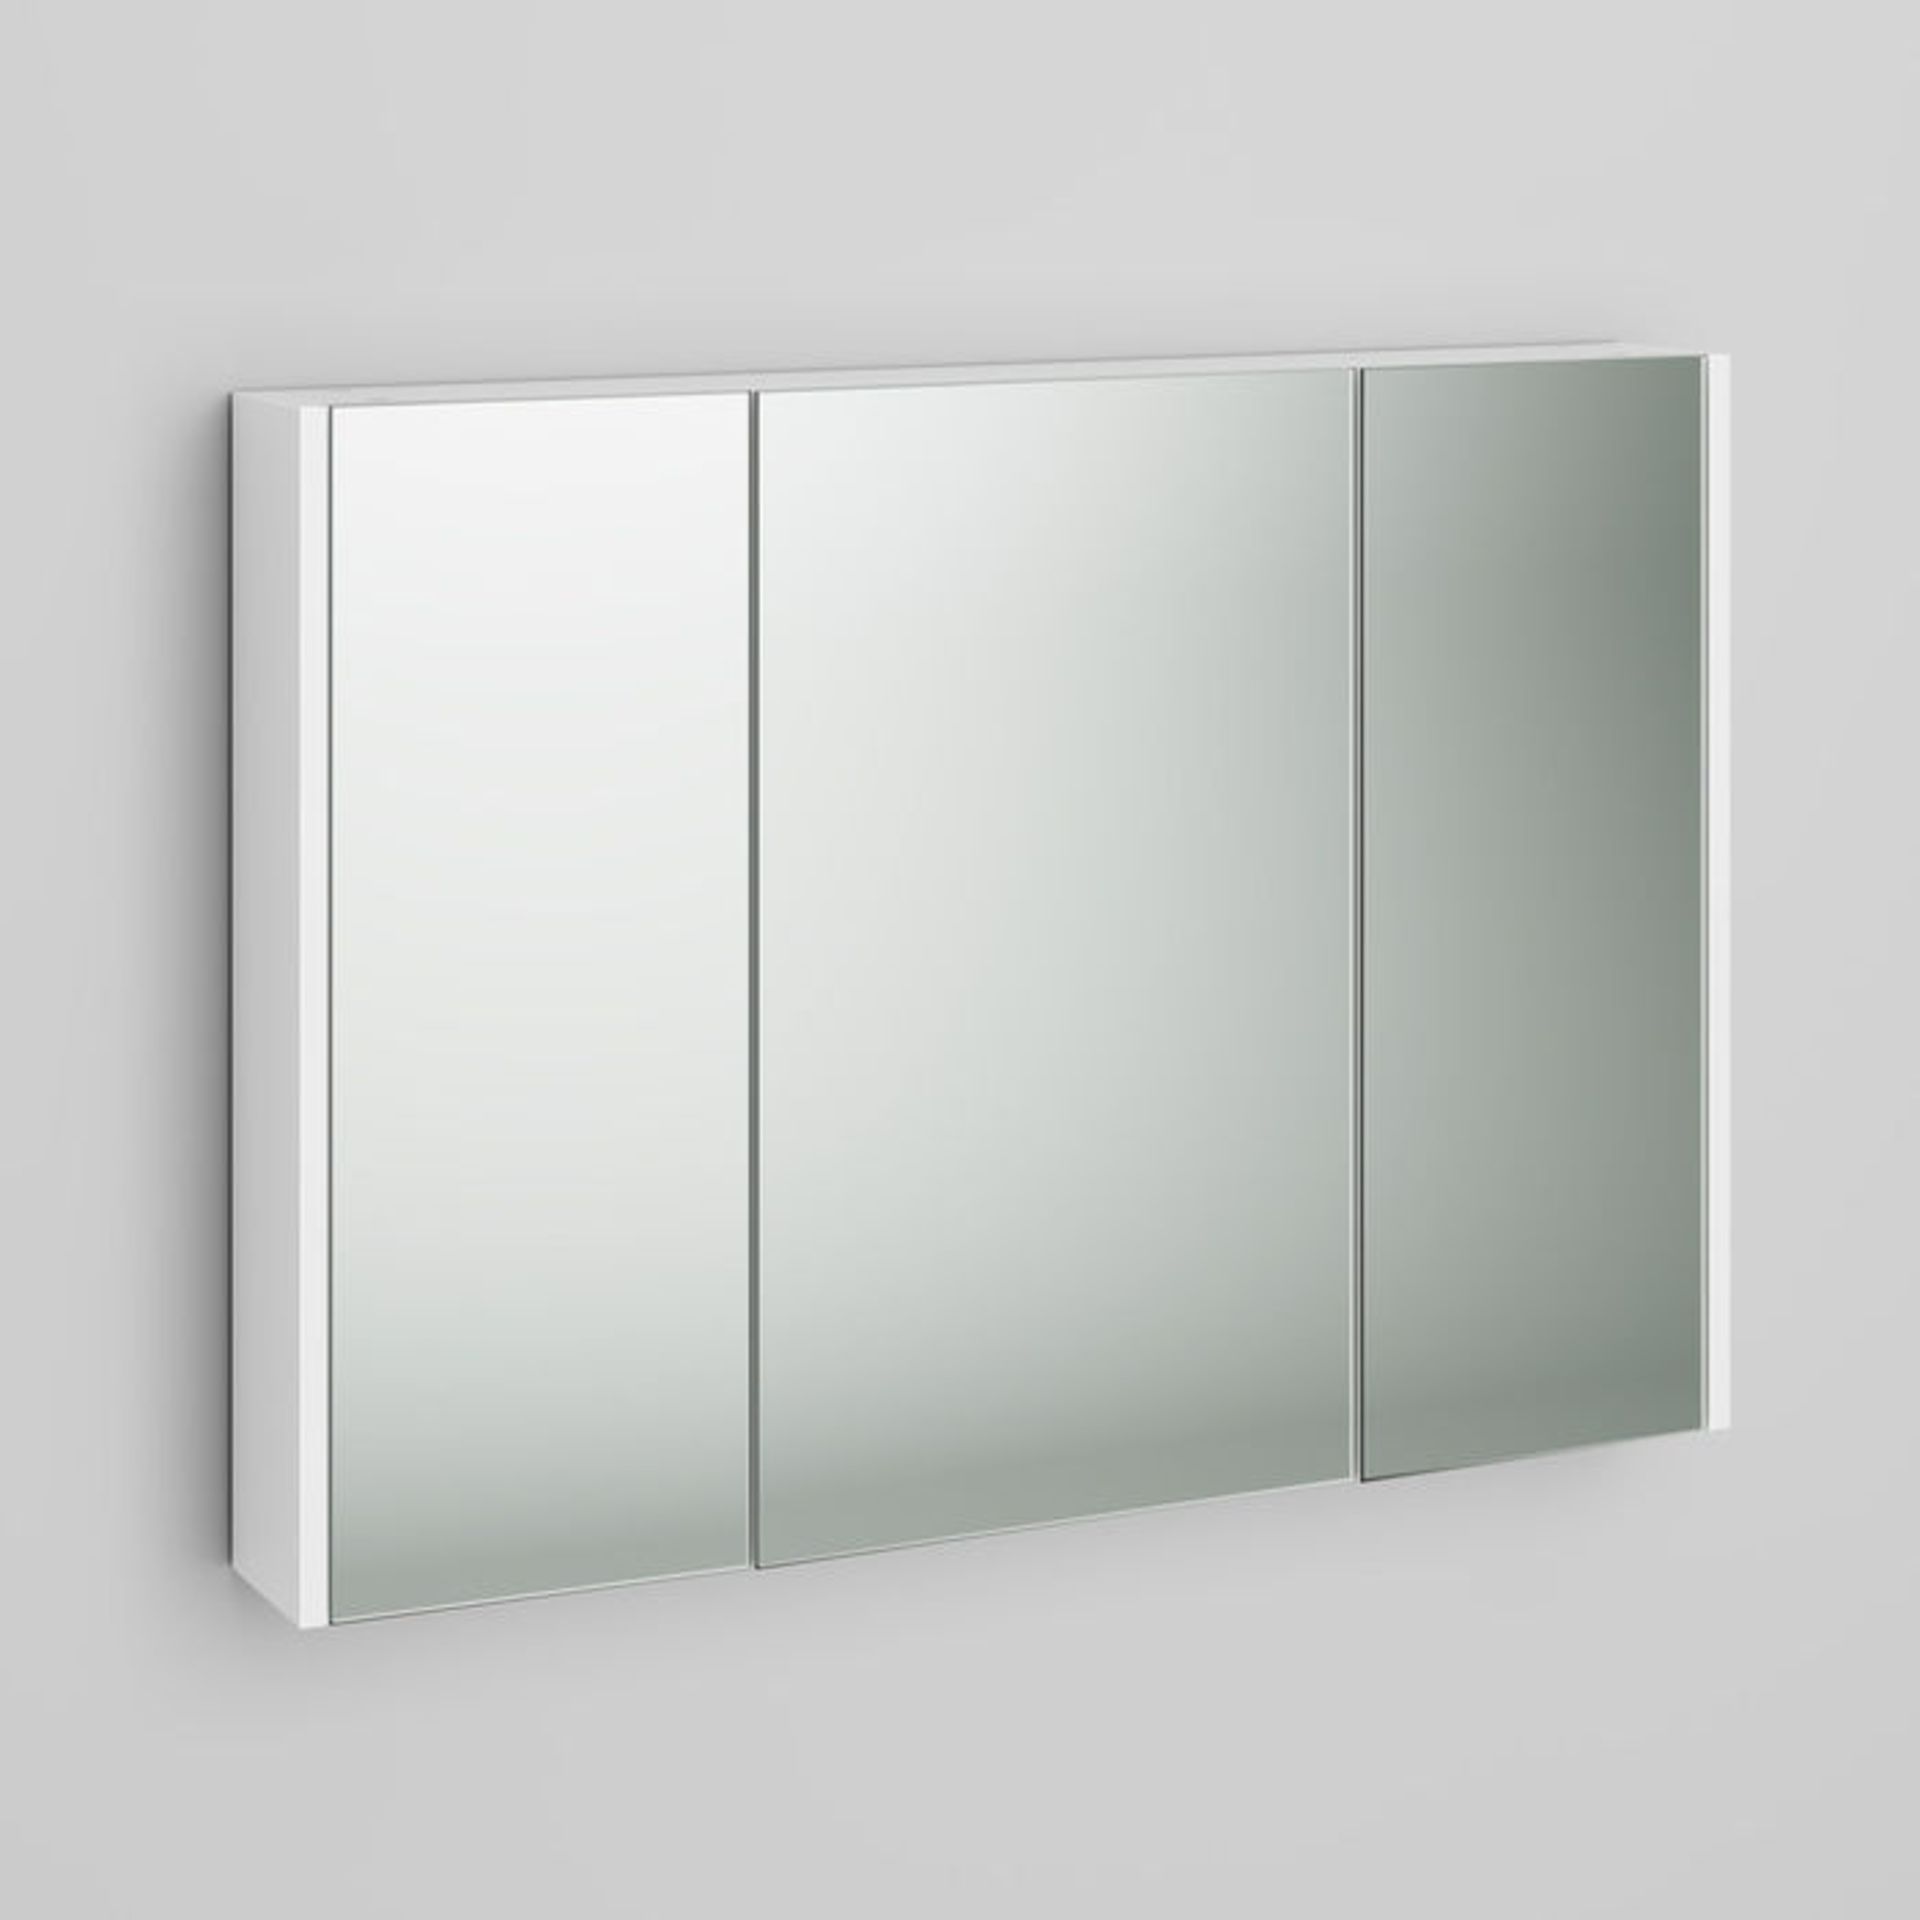 (TA148) 900mm Gloss White Triple Door Mirror Cabinet. RRP £299.99. Sleek contemporary design - Image 3 of 4